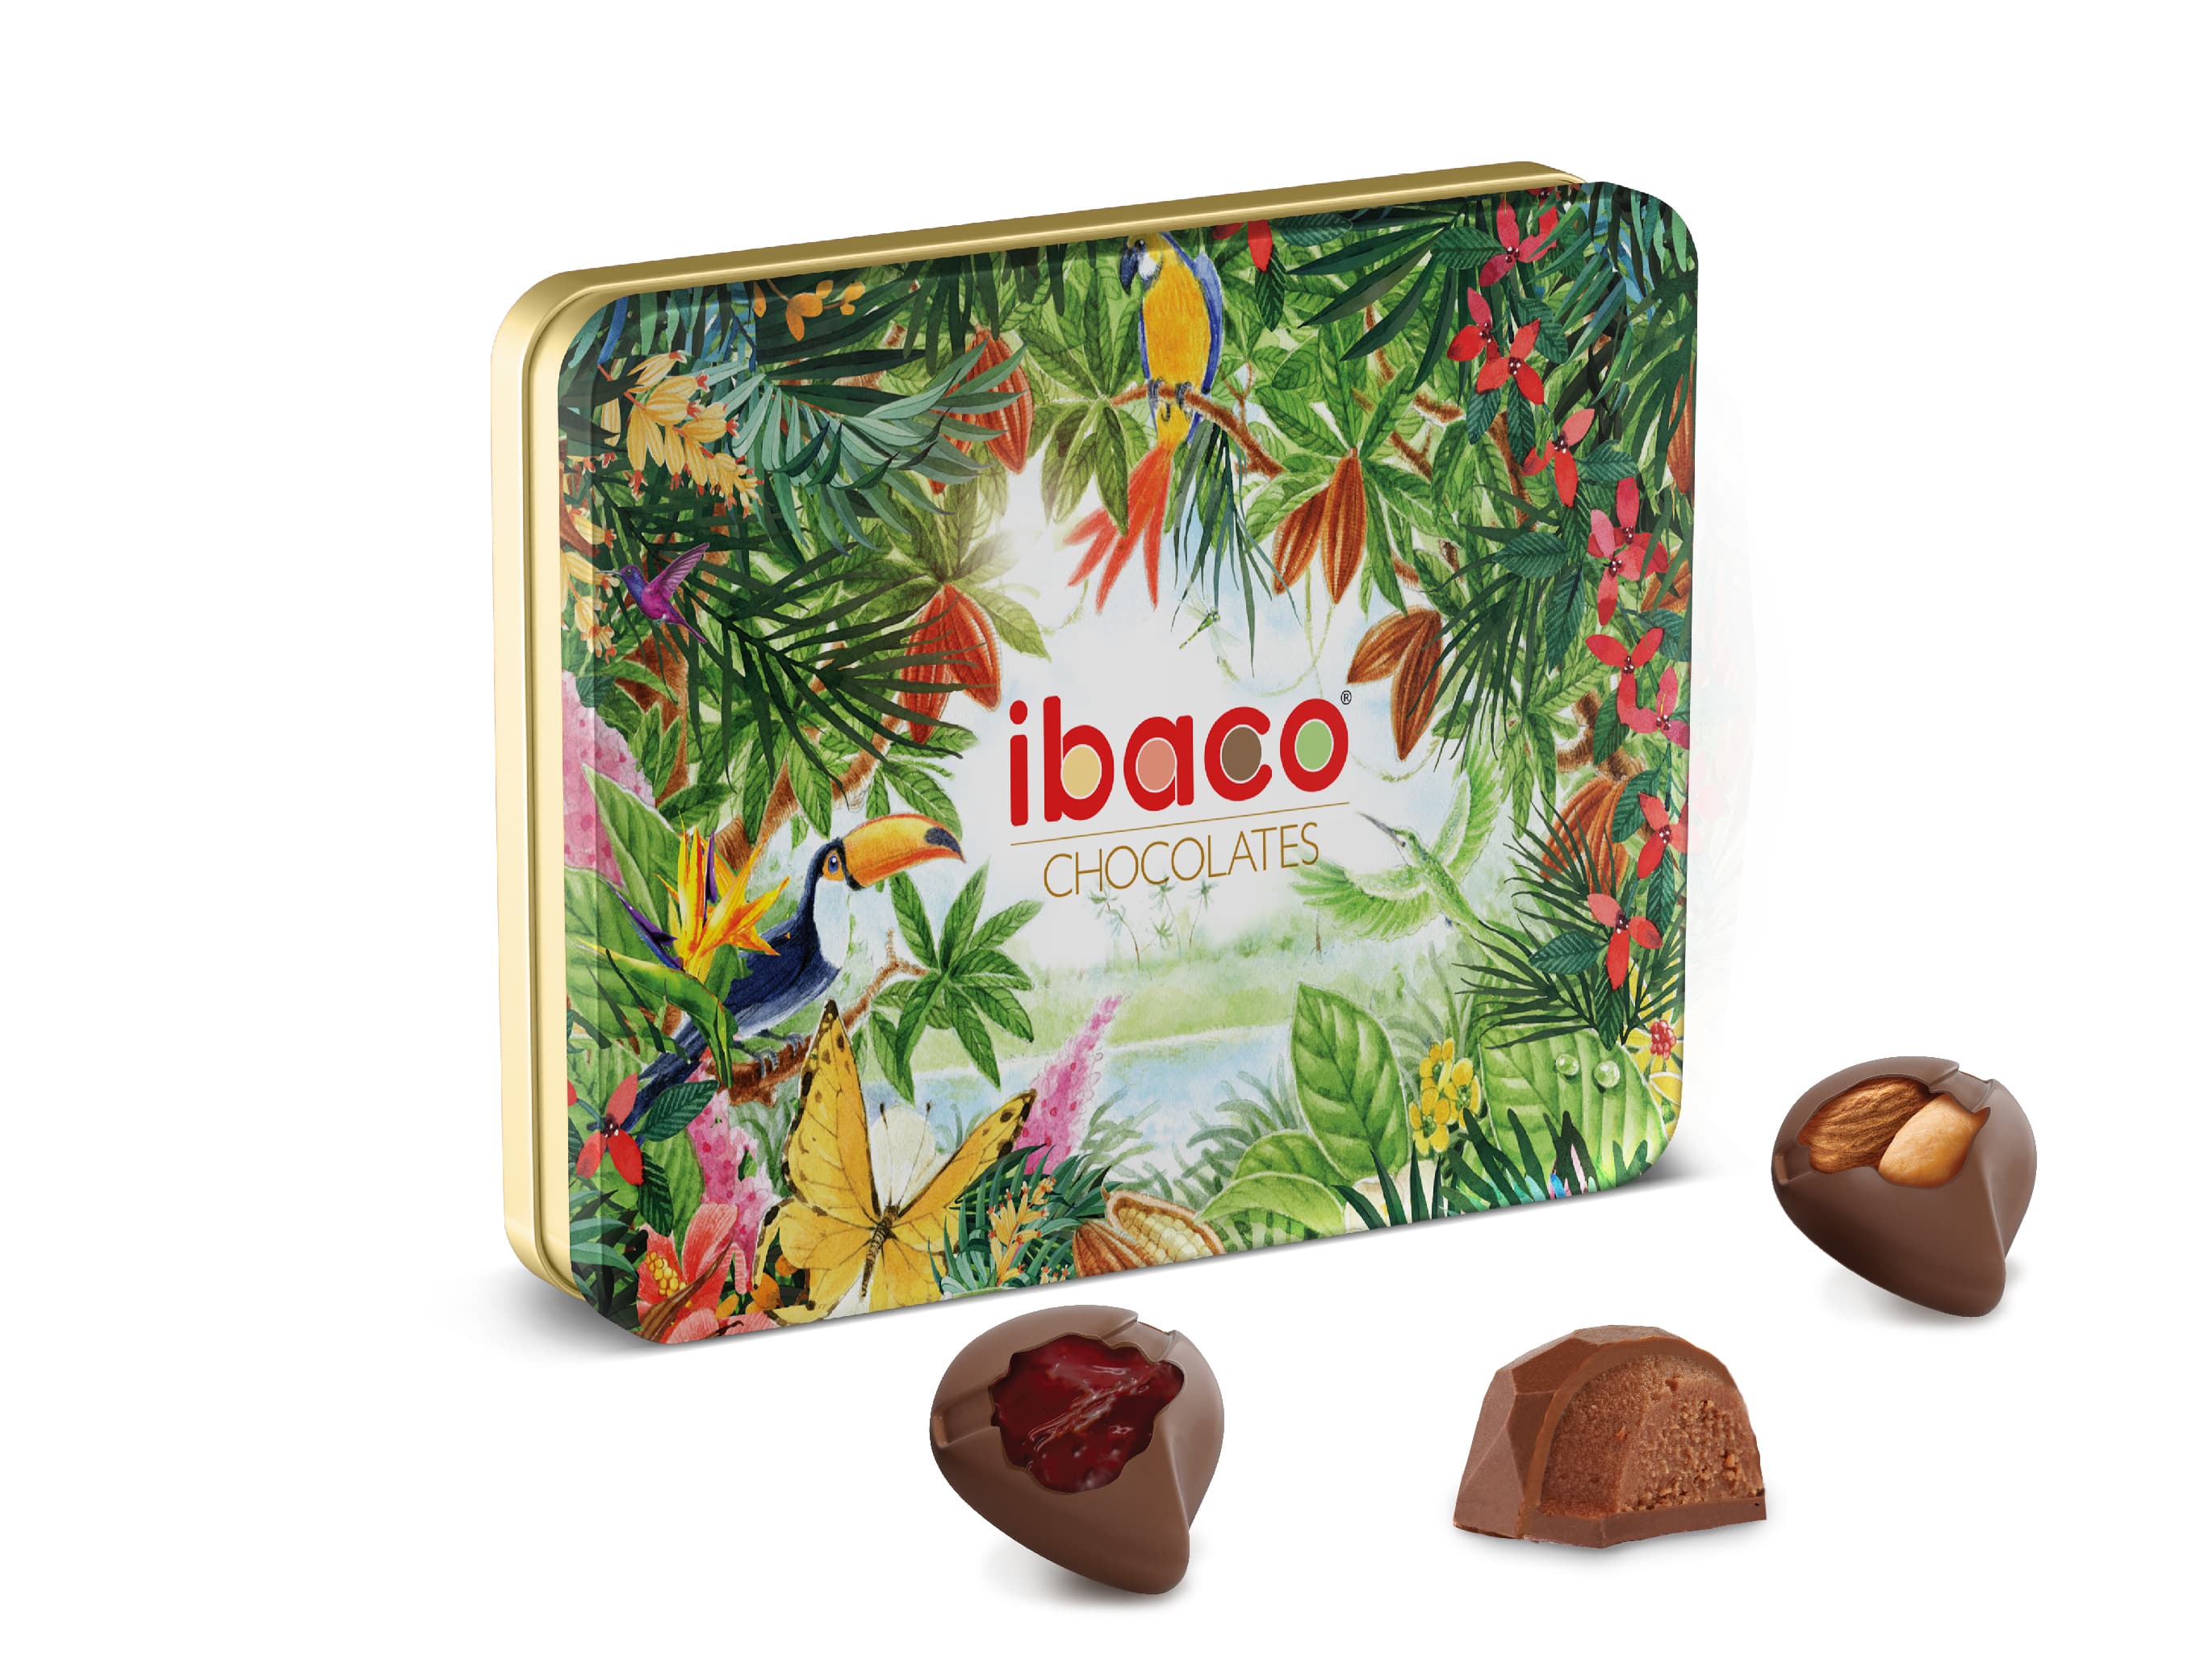 Send Ibaco Cake | Order Ibaco Cakes Online | Ibaco Cakes Near Me